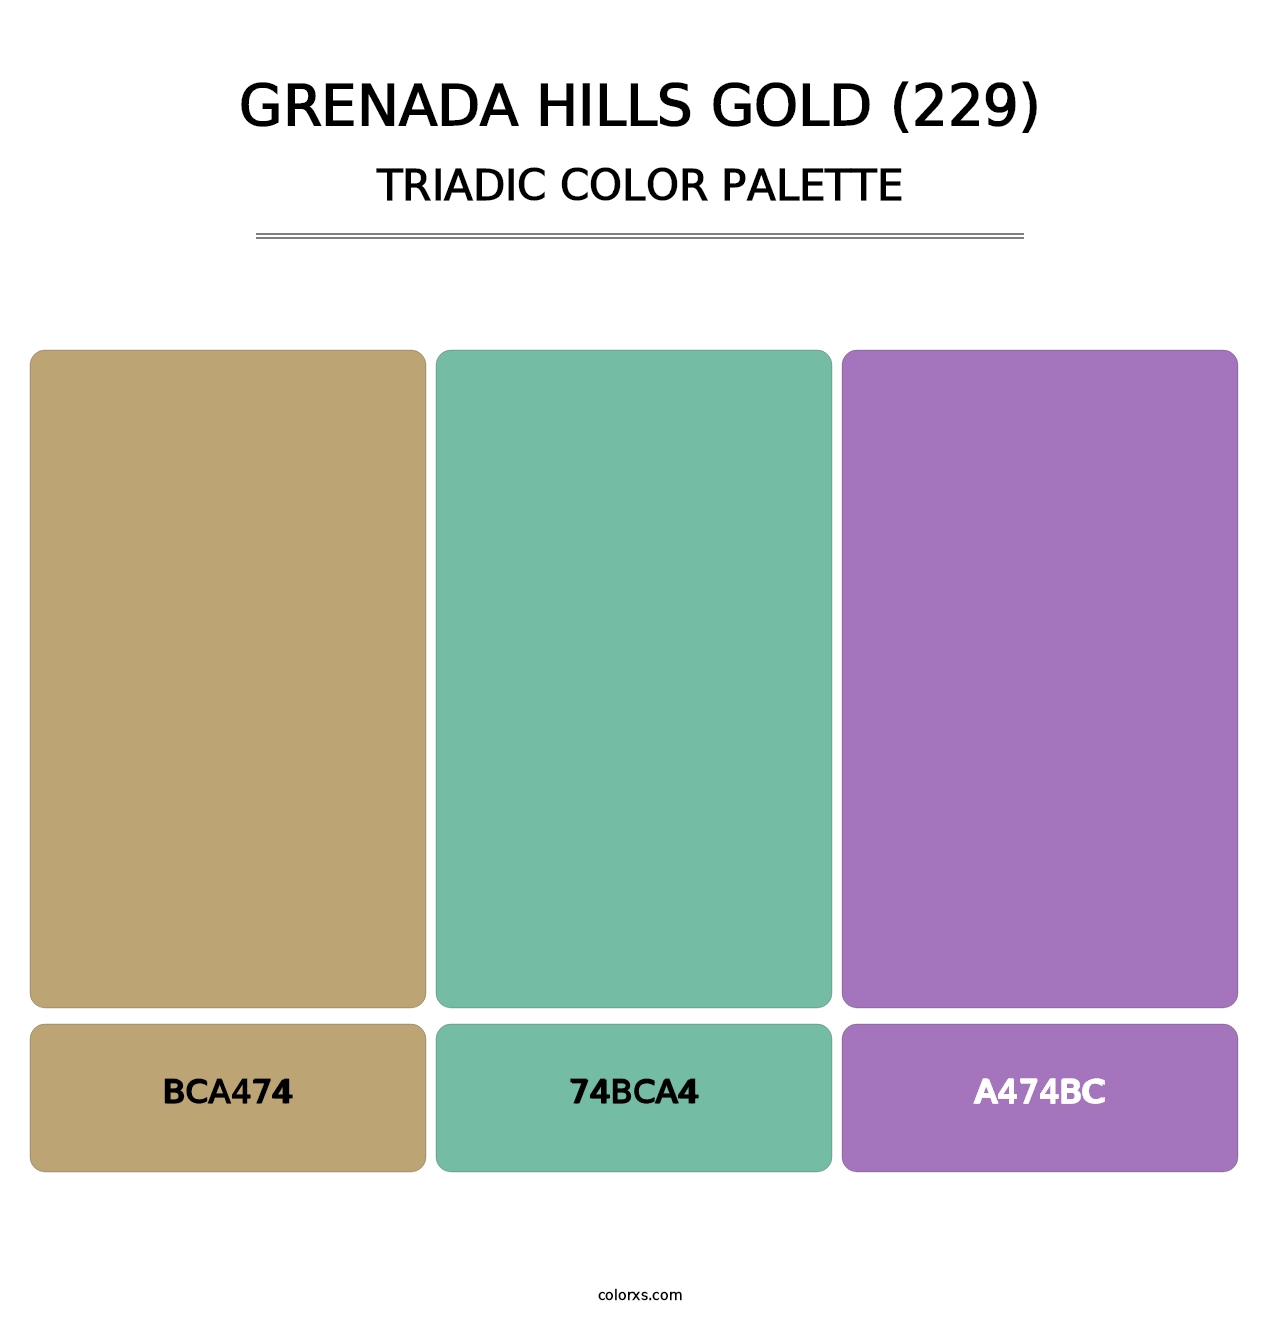 Grenada Hills Gold (229) - Triadic Color Palette